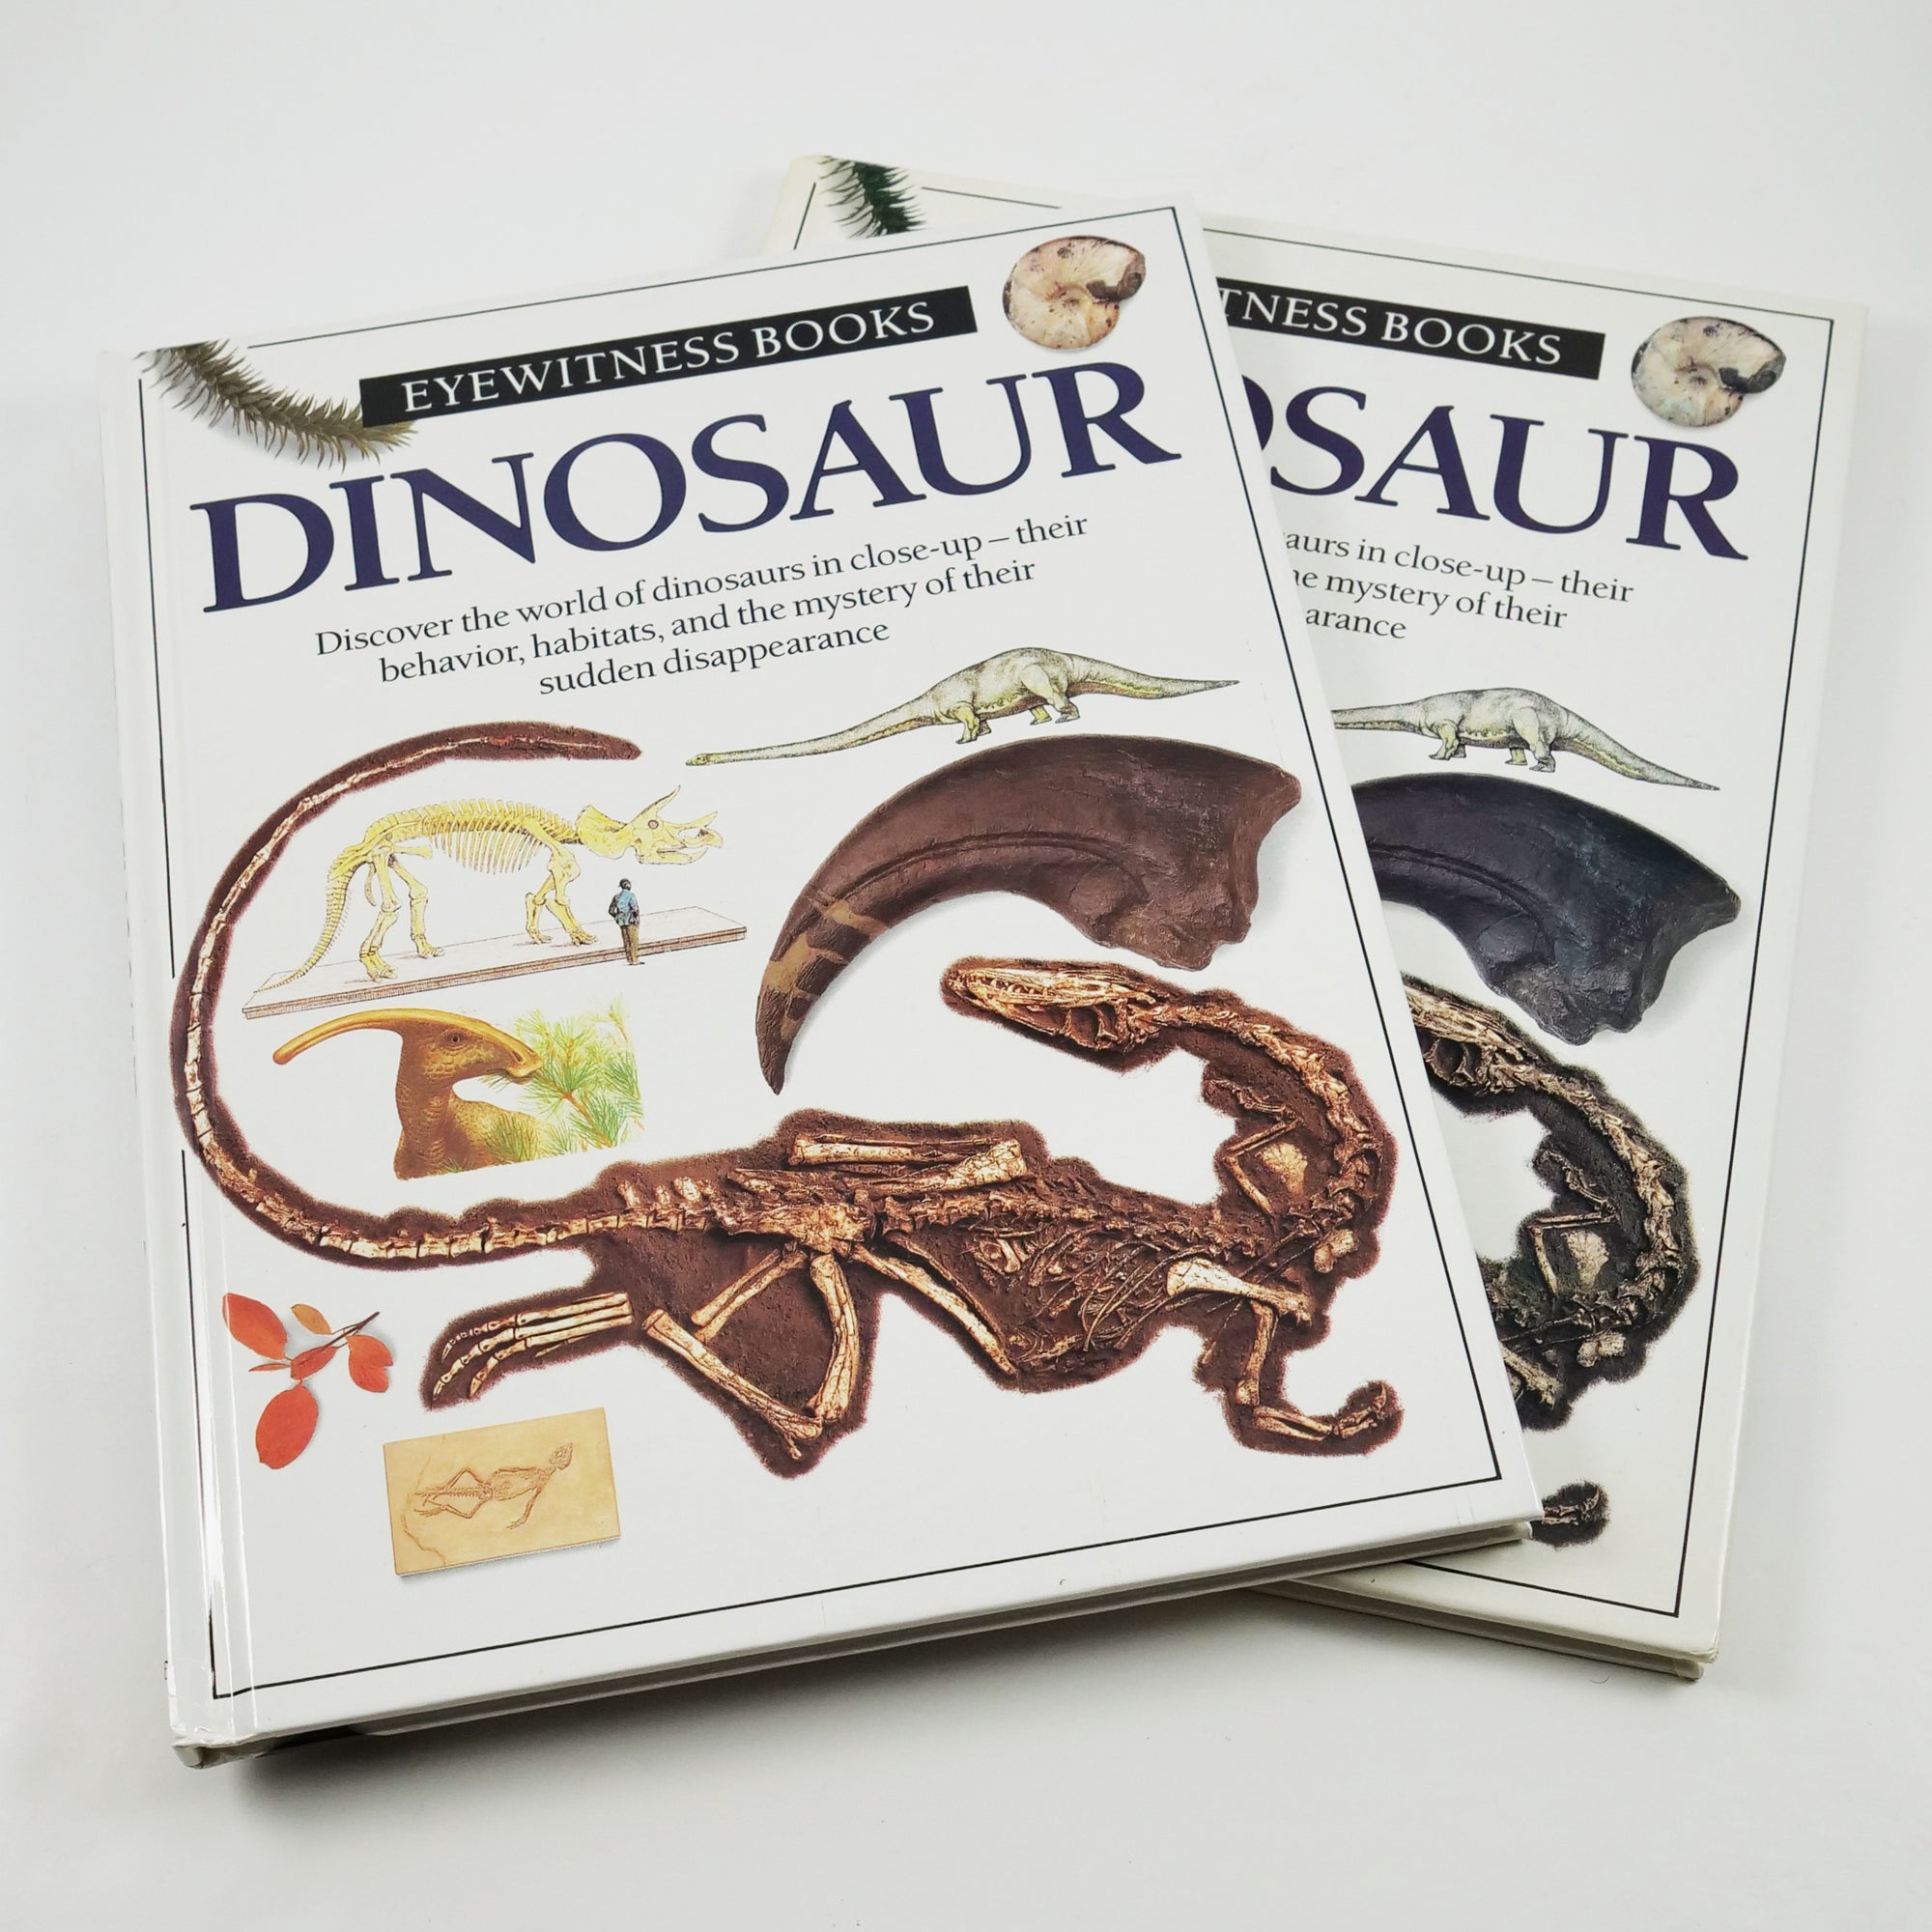 Revolutionary Children's Books: Eyewitness Dinosaur